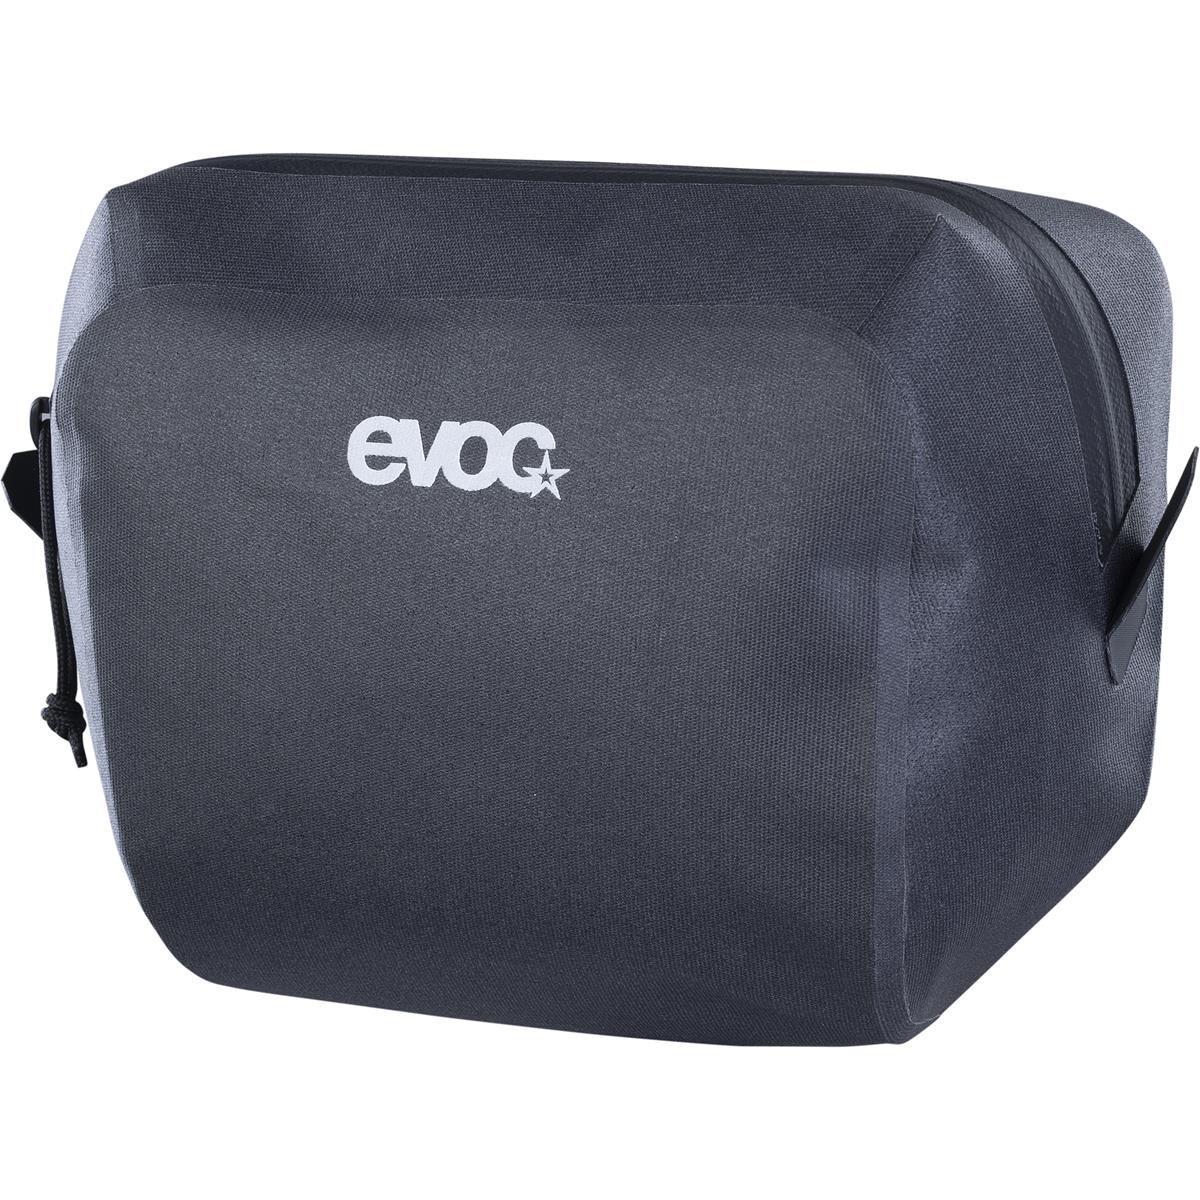 Evoc Pocket for Chest Protector Pin Pack 1.5 Black